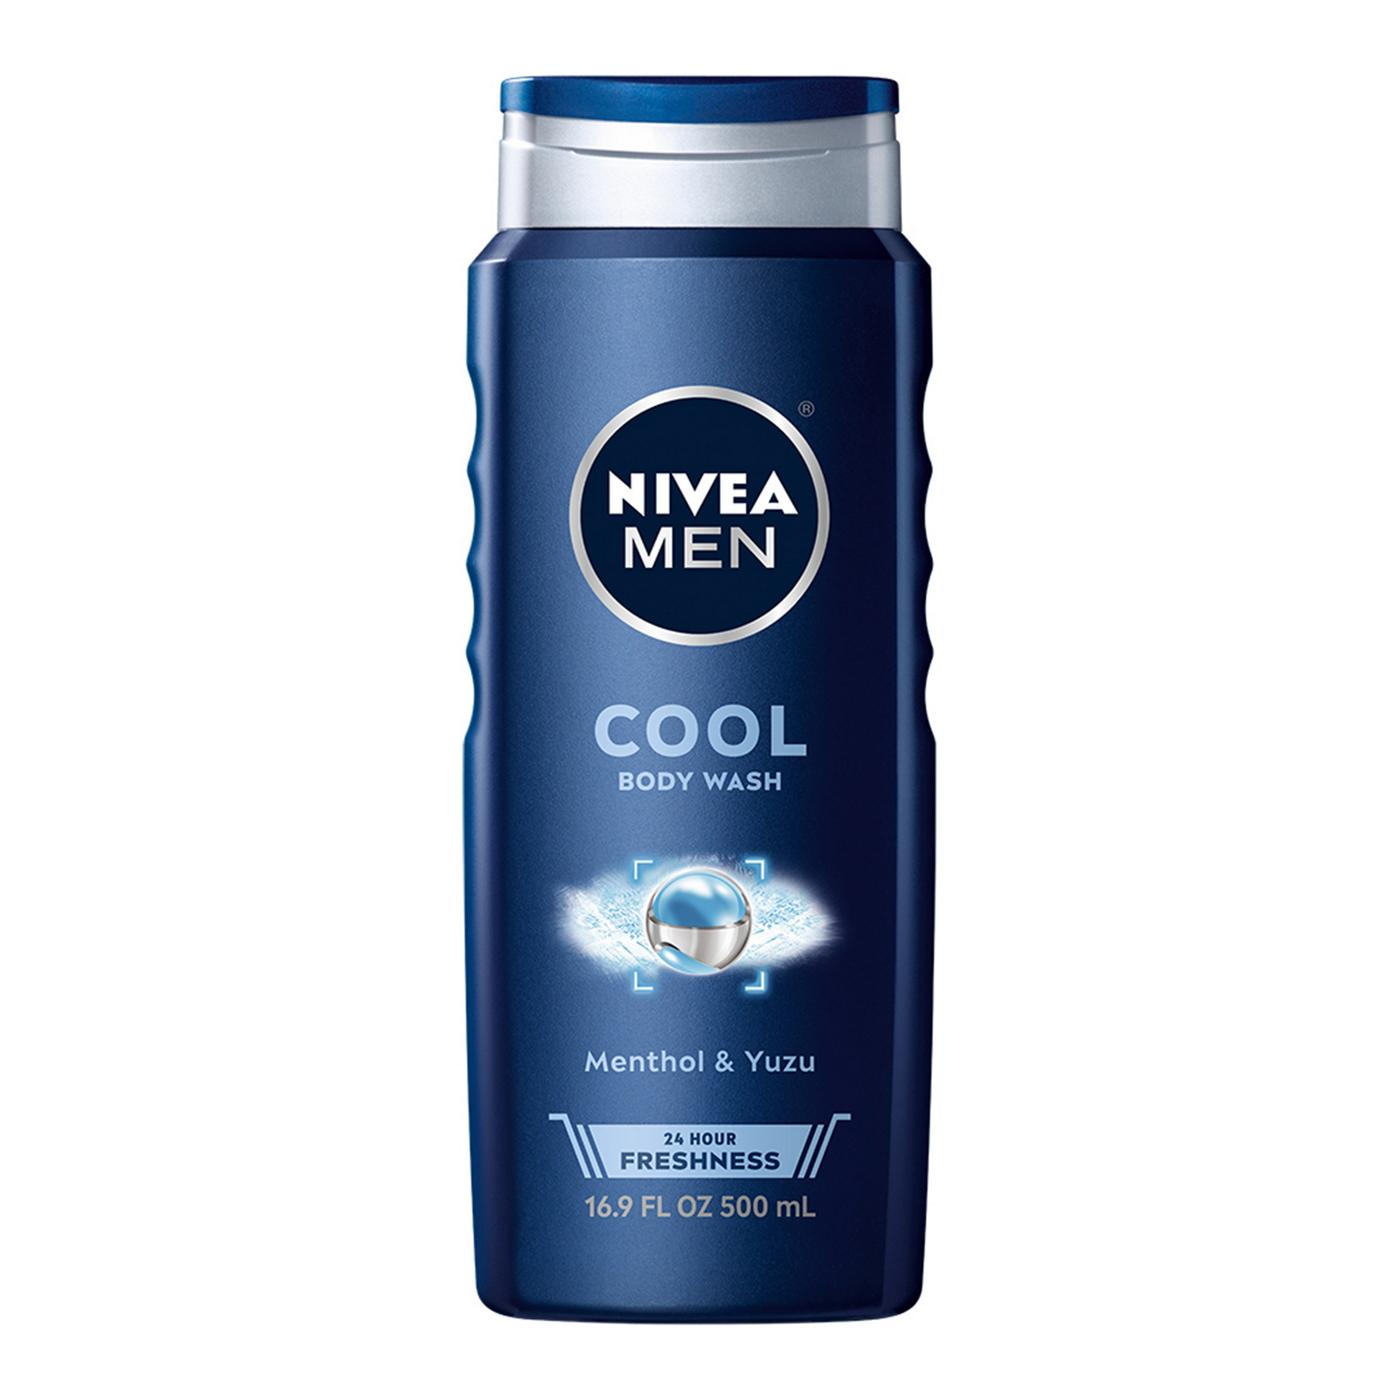 NIVEA Men Cool Body Wash - Menthol & Yuzu